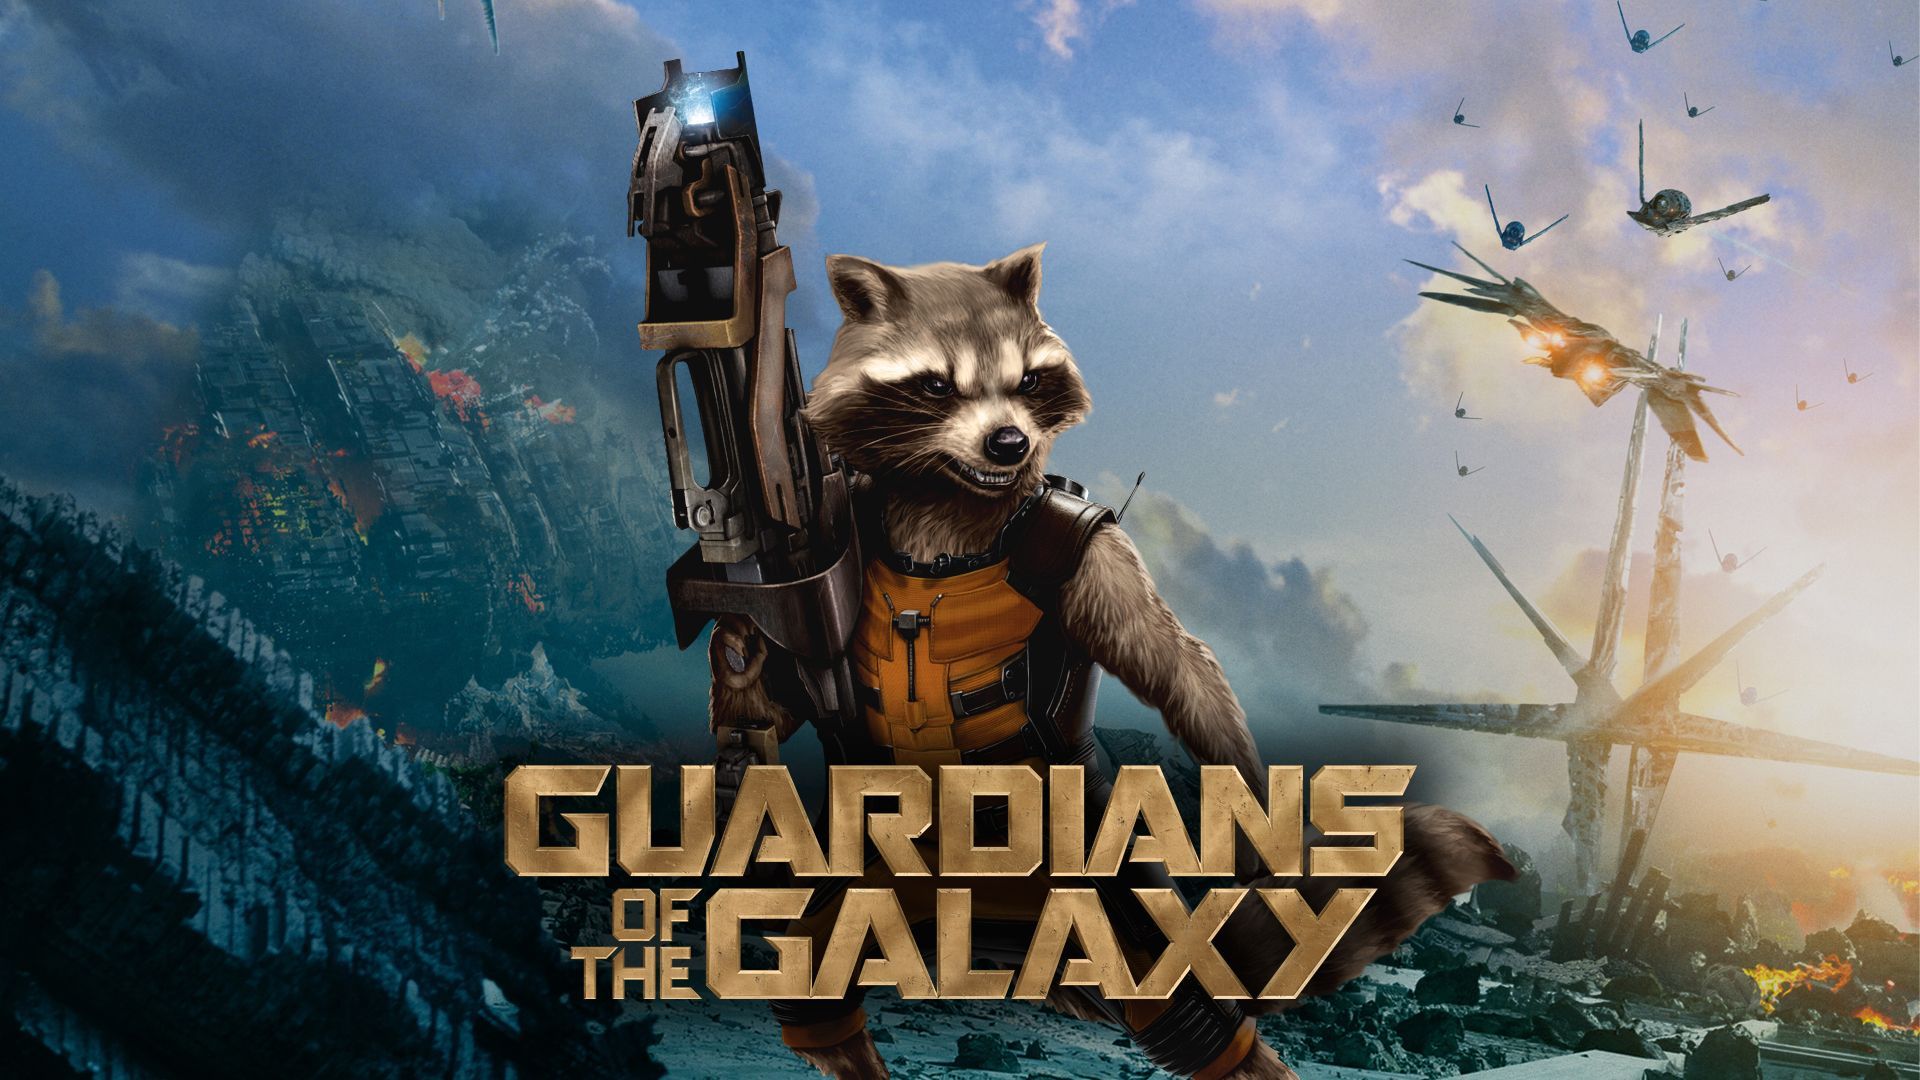 Best Guardians Of The Galaxy Wallpaper. Galaxy wallpaper